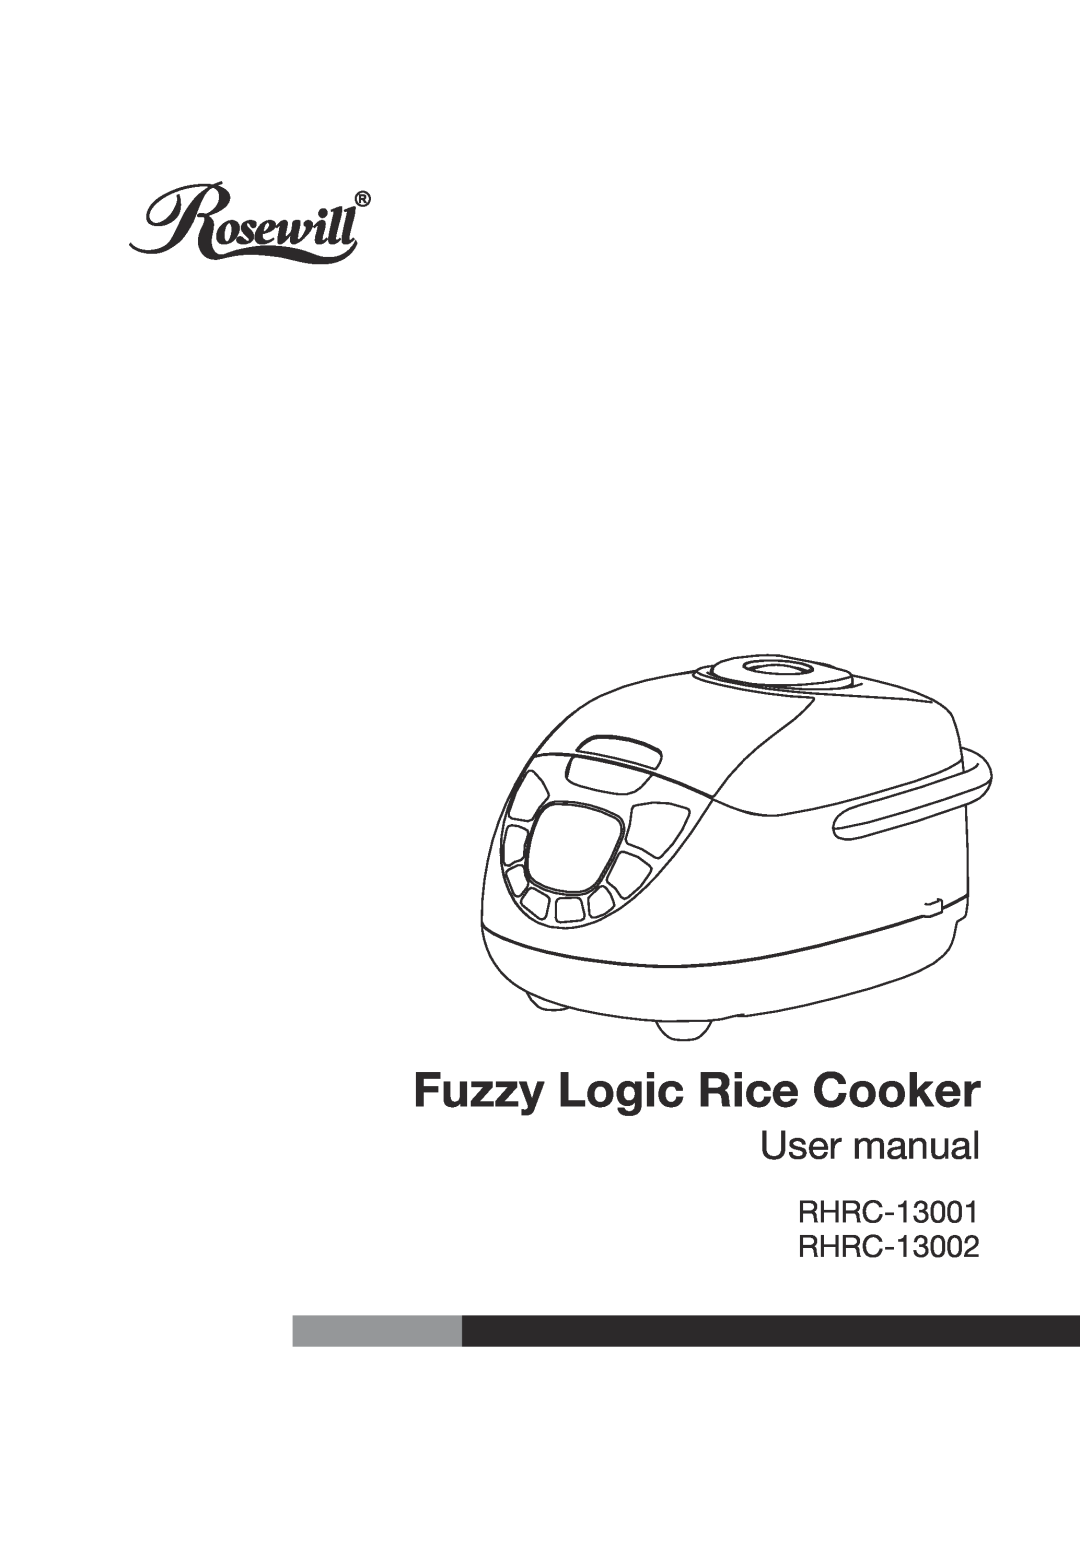 Rosewill user manual Fuzzy Logic Rice Cooker, RHRC-13001 RHRC-13002 